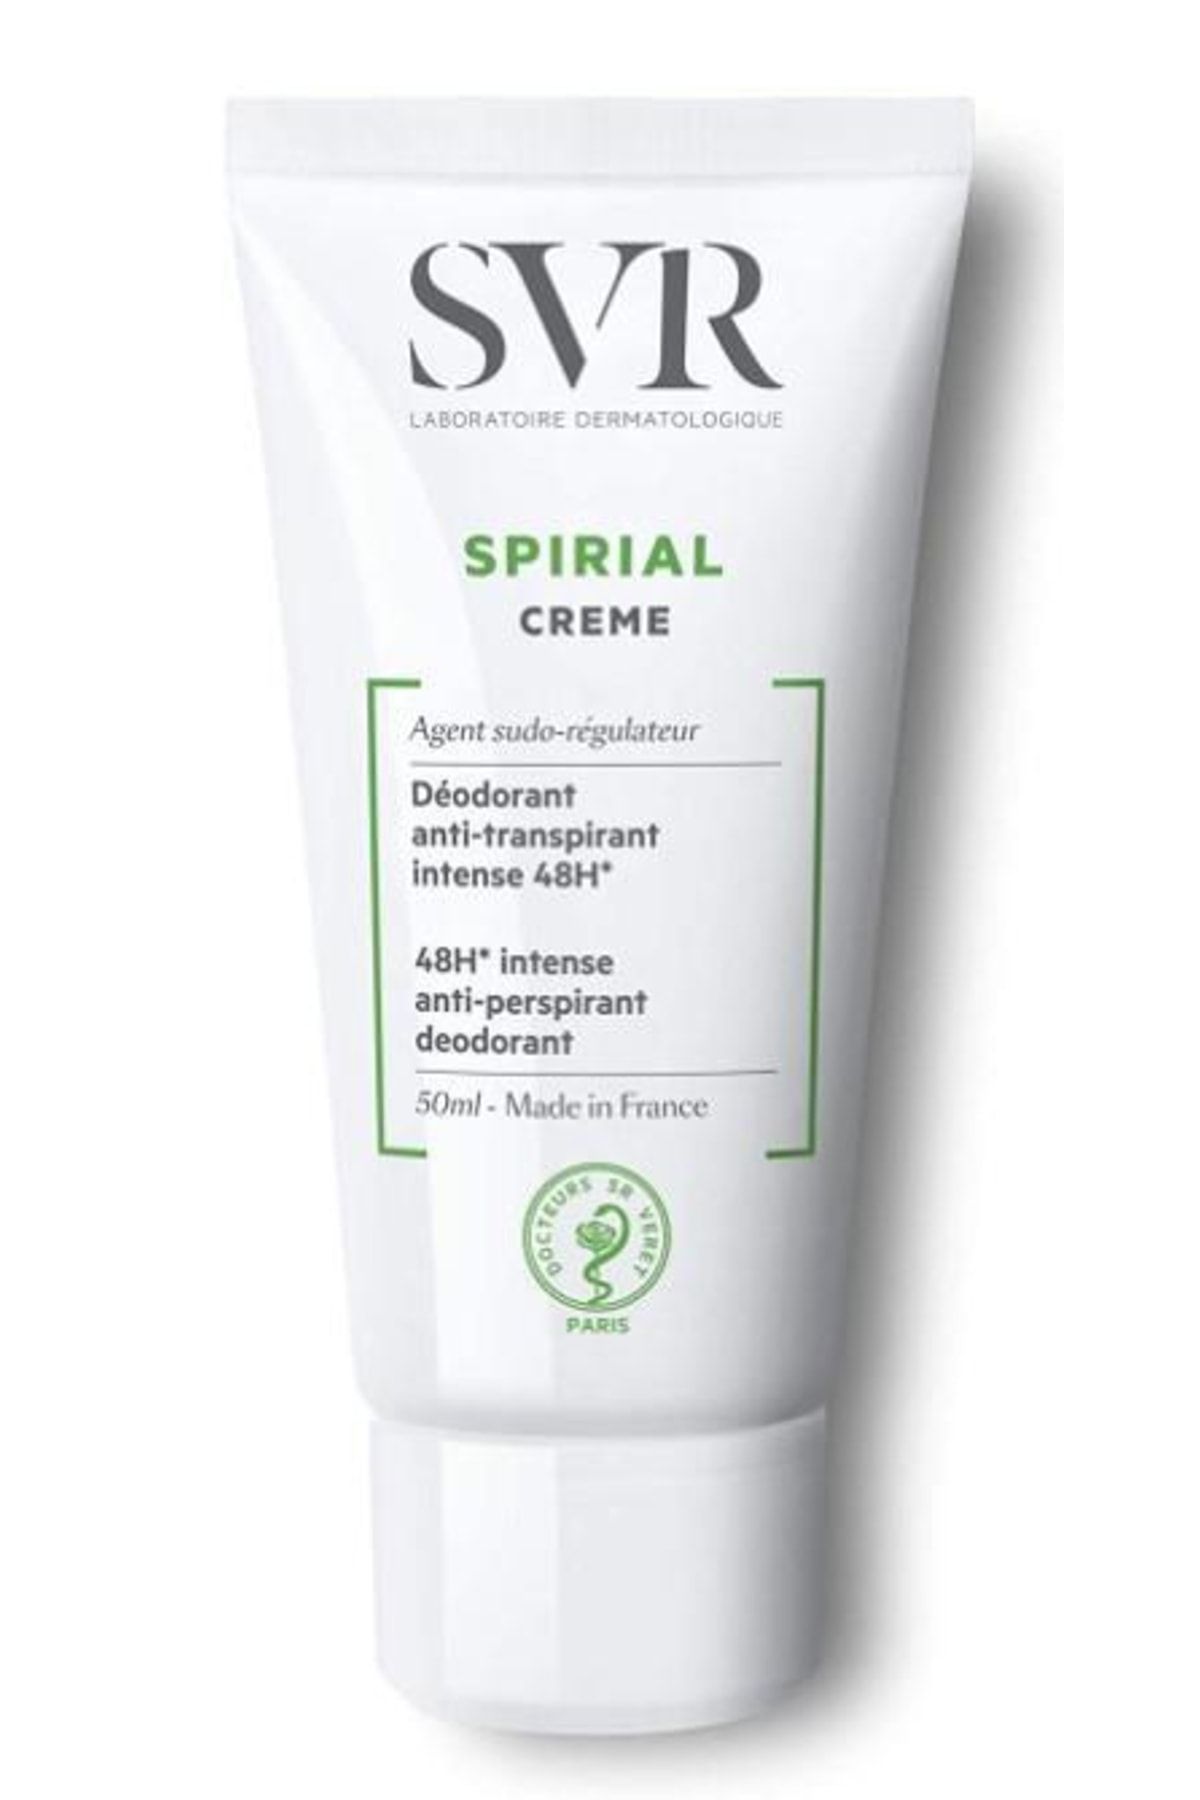 SVR Spiral Deo-creme Anti-perspirant 50ml | 48h Etkili Krem Deodorant